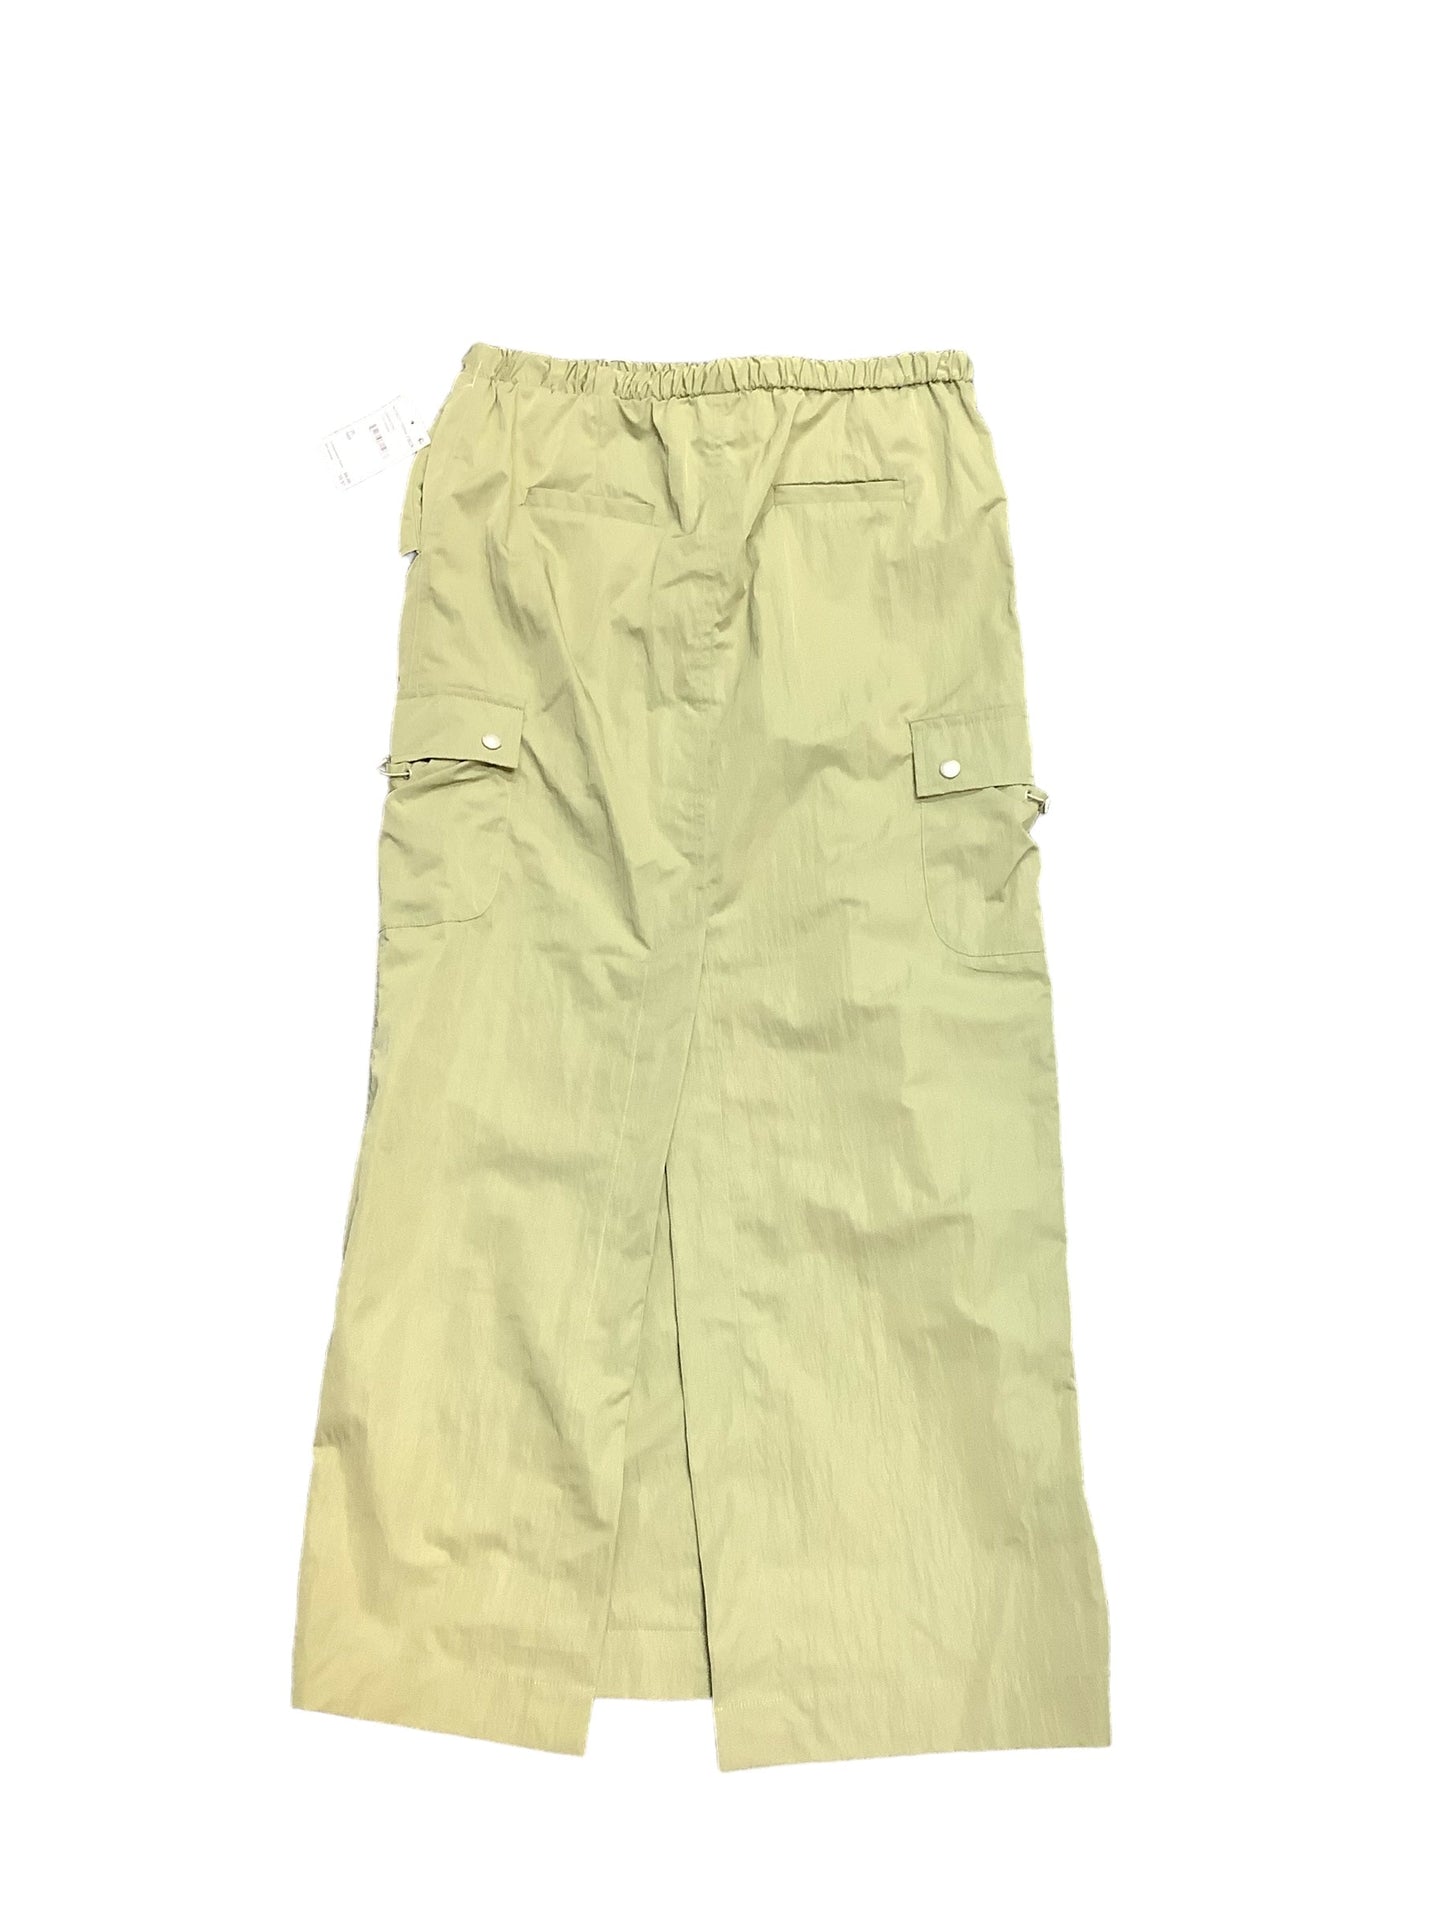 Green Skirt Maxi Blanknyc, Size 4